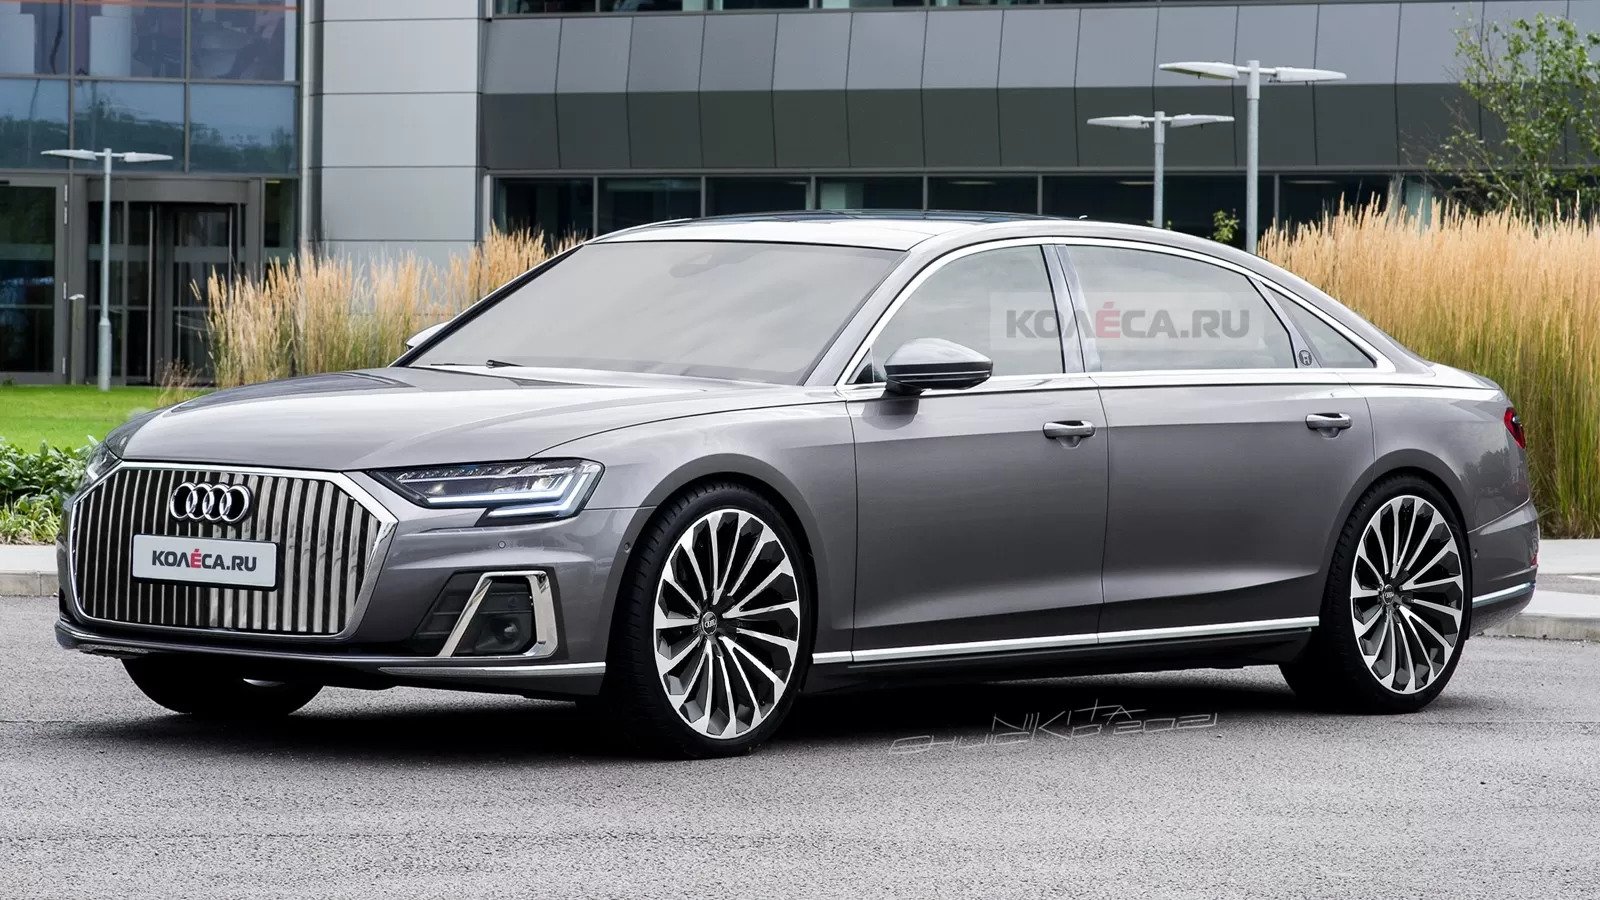 https://www.carscoops.com/wp-content/uploads/2021/04/Audi-A8-L-Horch-1.jpg